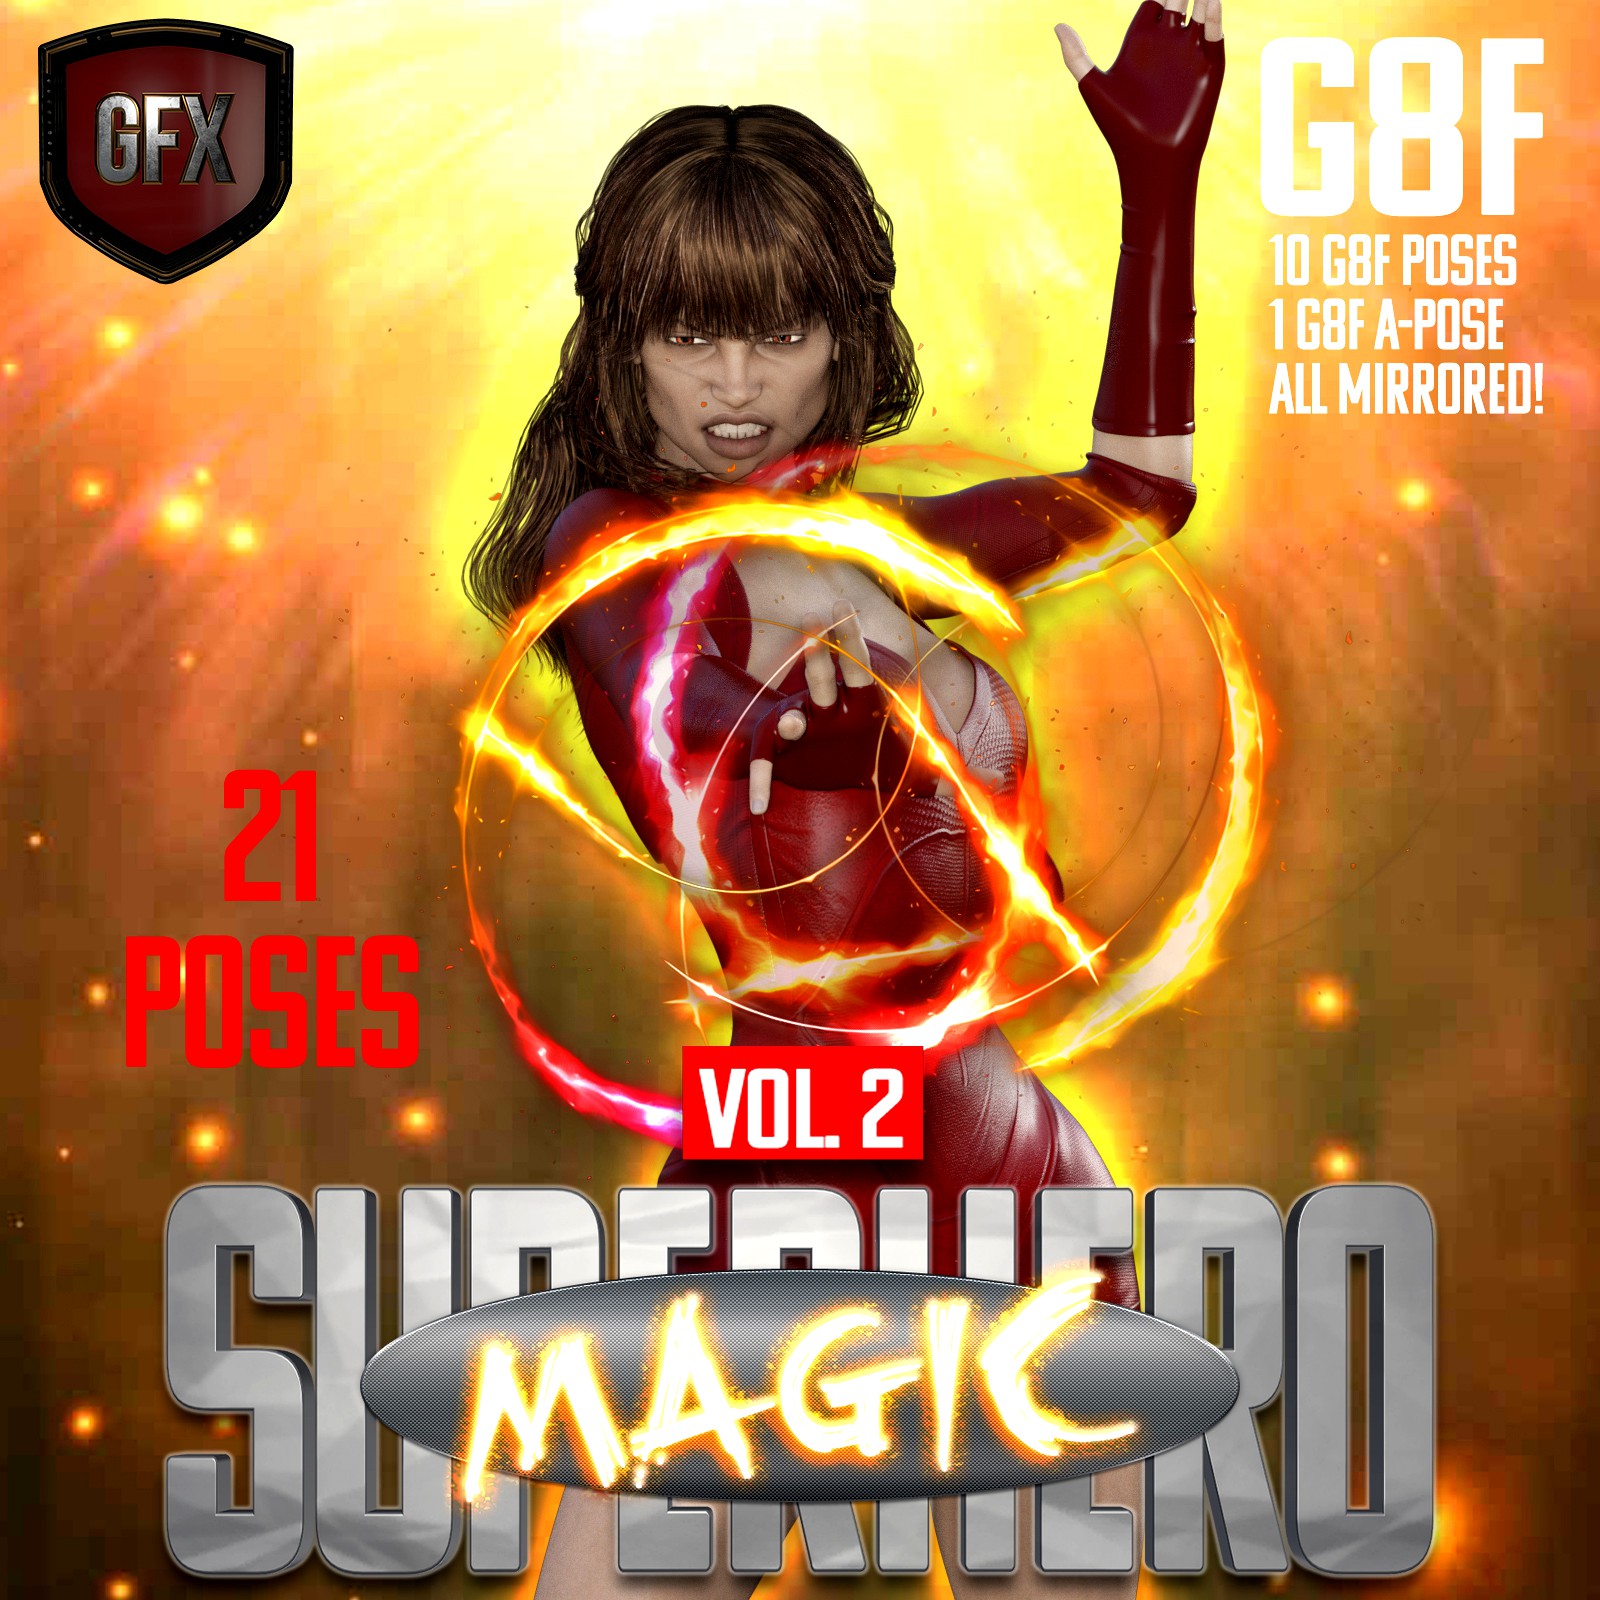 SuperHero Magic for G8F Volume 2